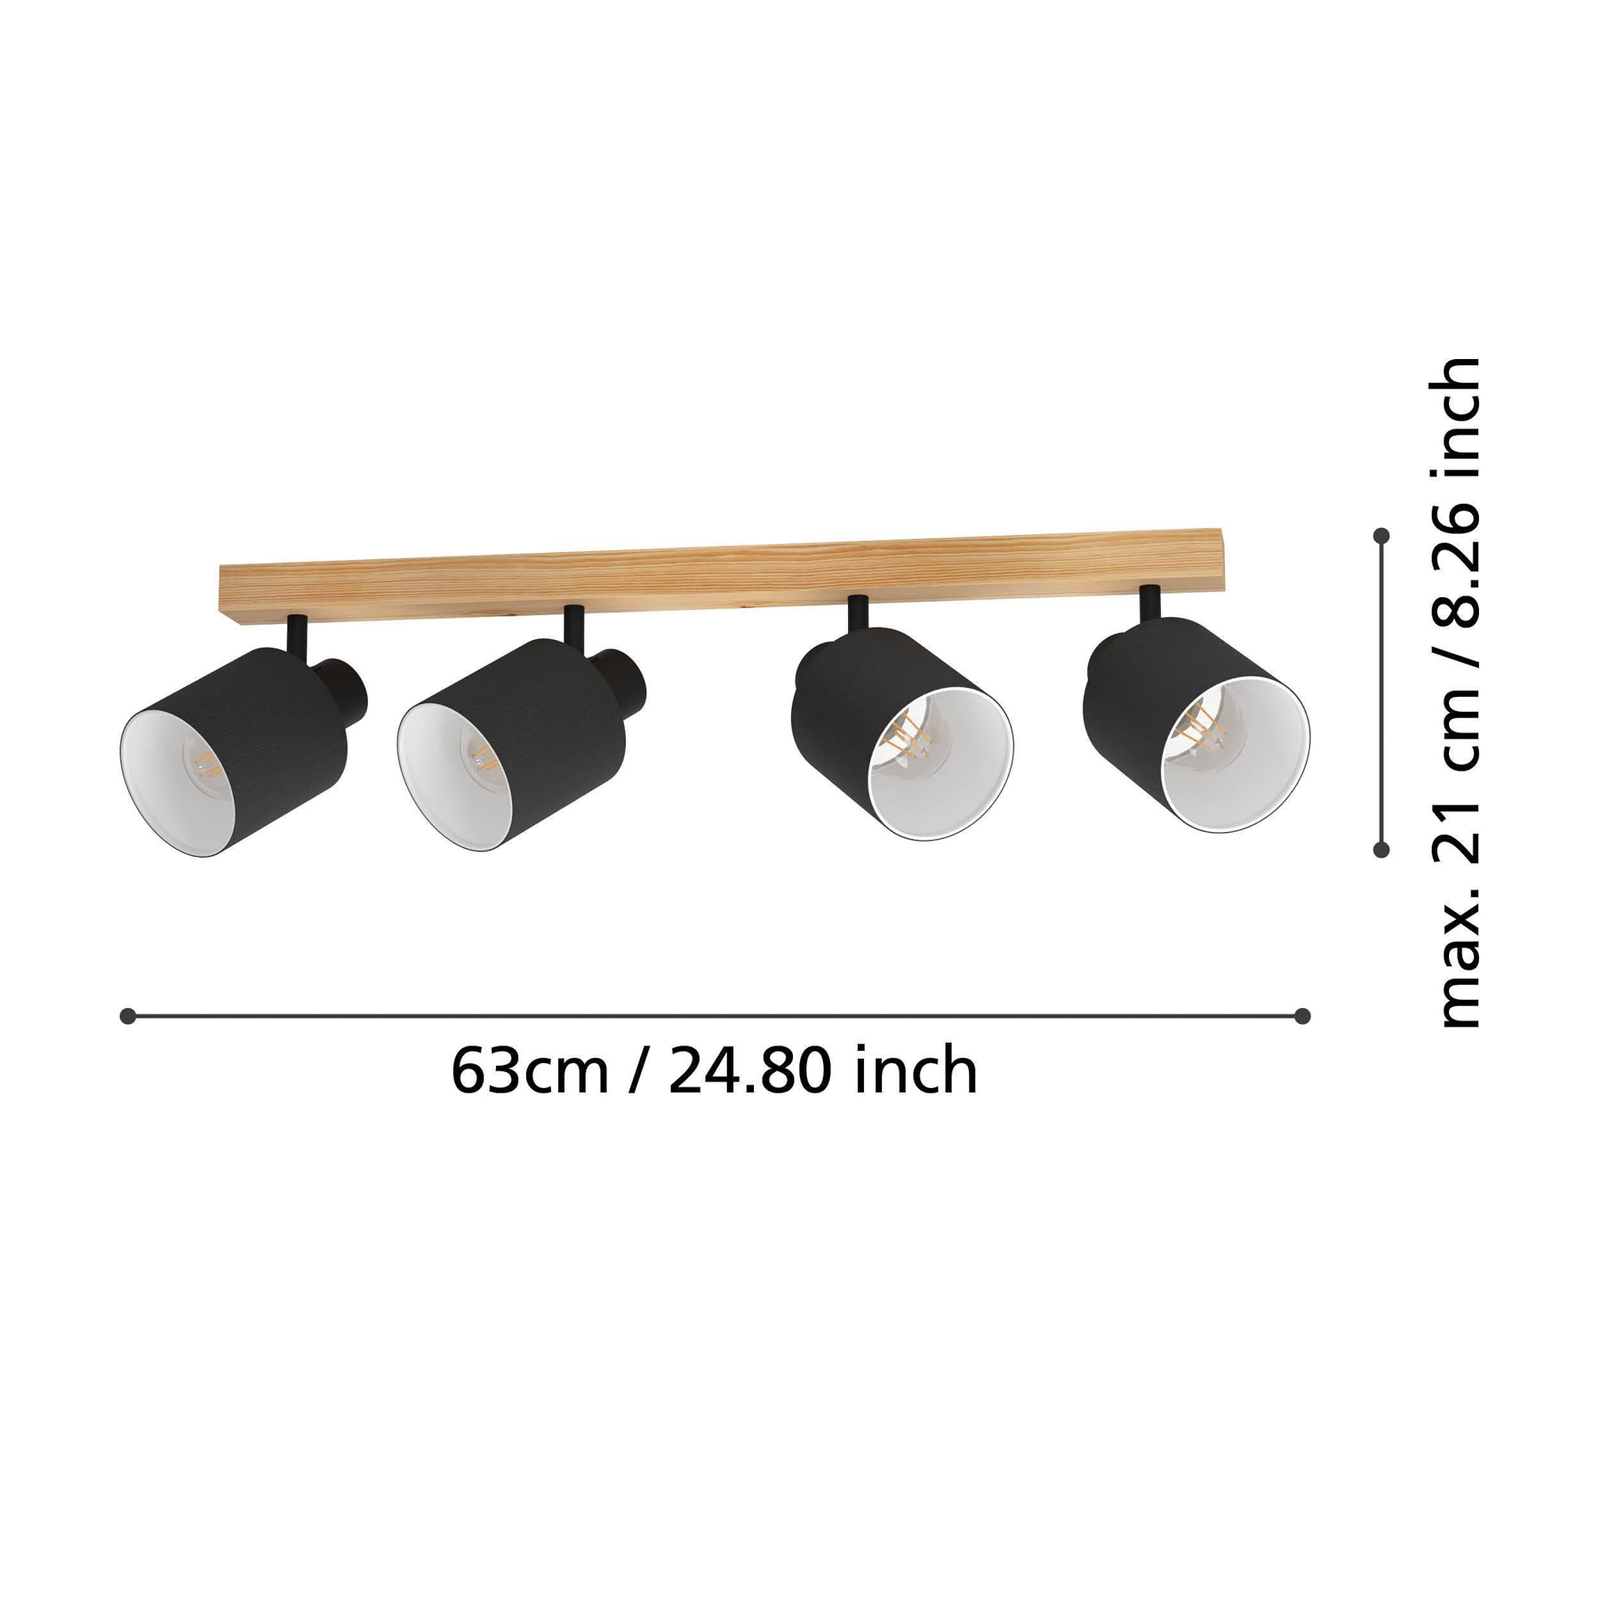 Batallas downlight, length 63 cm, black/wood, 4-bulb.